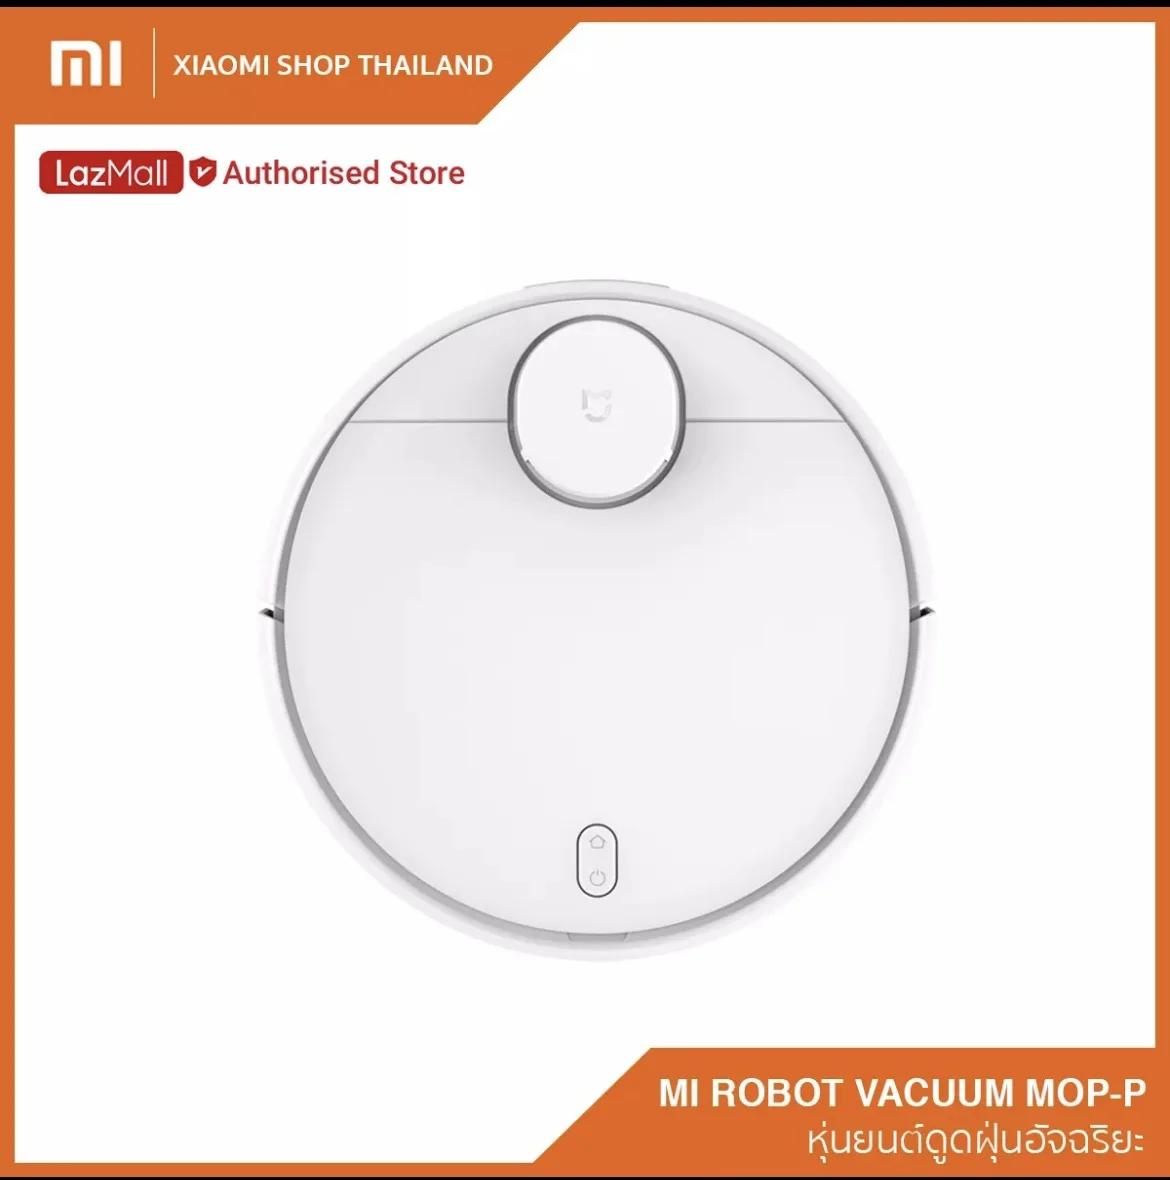 Xiaomi Mi Robot Vacuum Mop Pro (Global Version) หุ่นยนต์ดูดฝุ่นพร้อมม็อบถูพื้นในตัว / รับประกันศูนย์ไทย 1 ปี